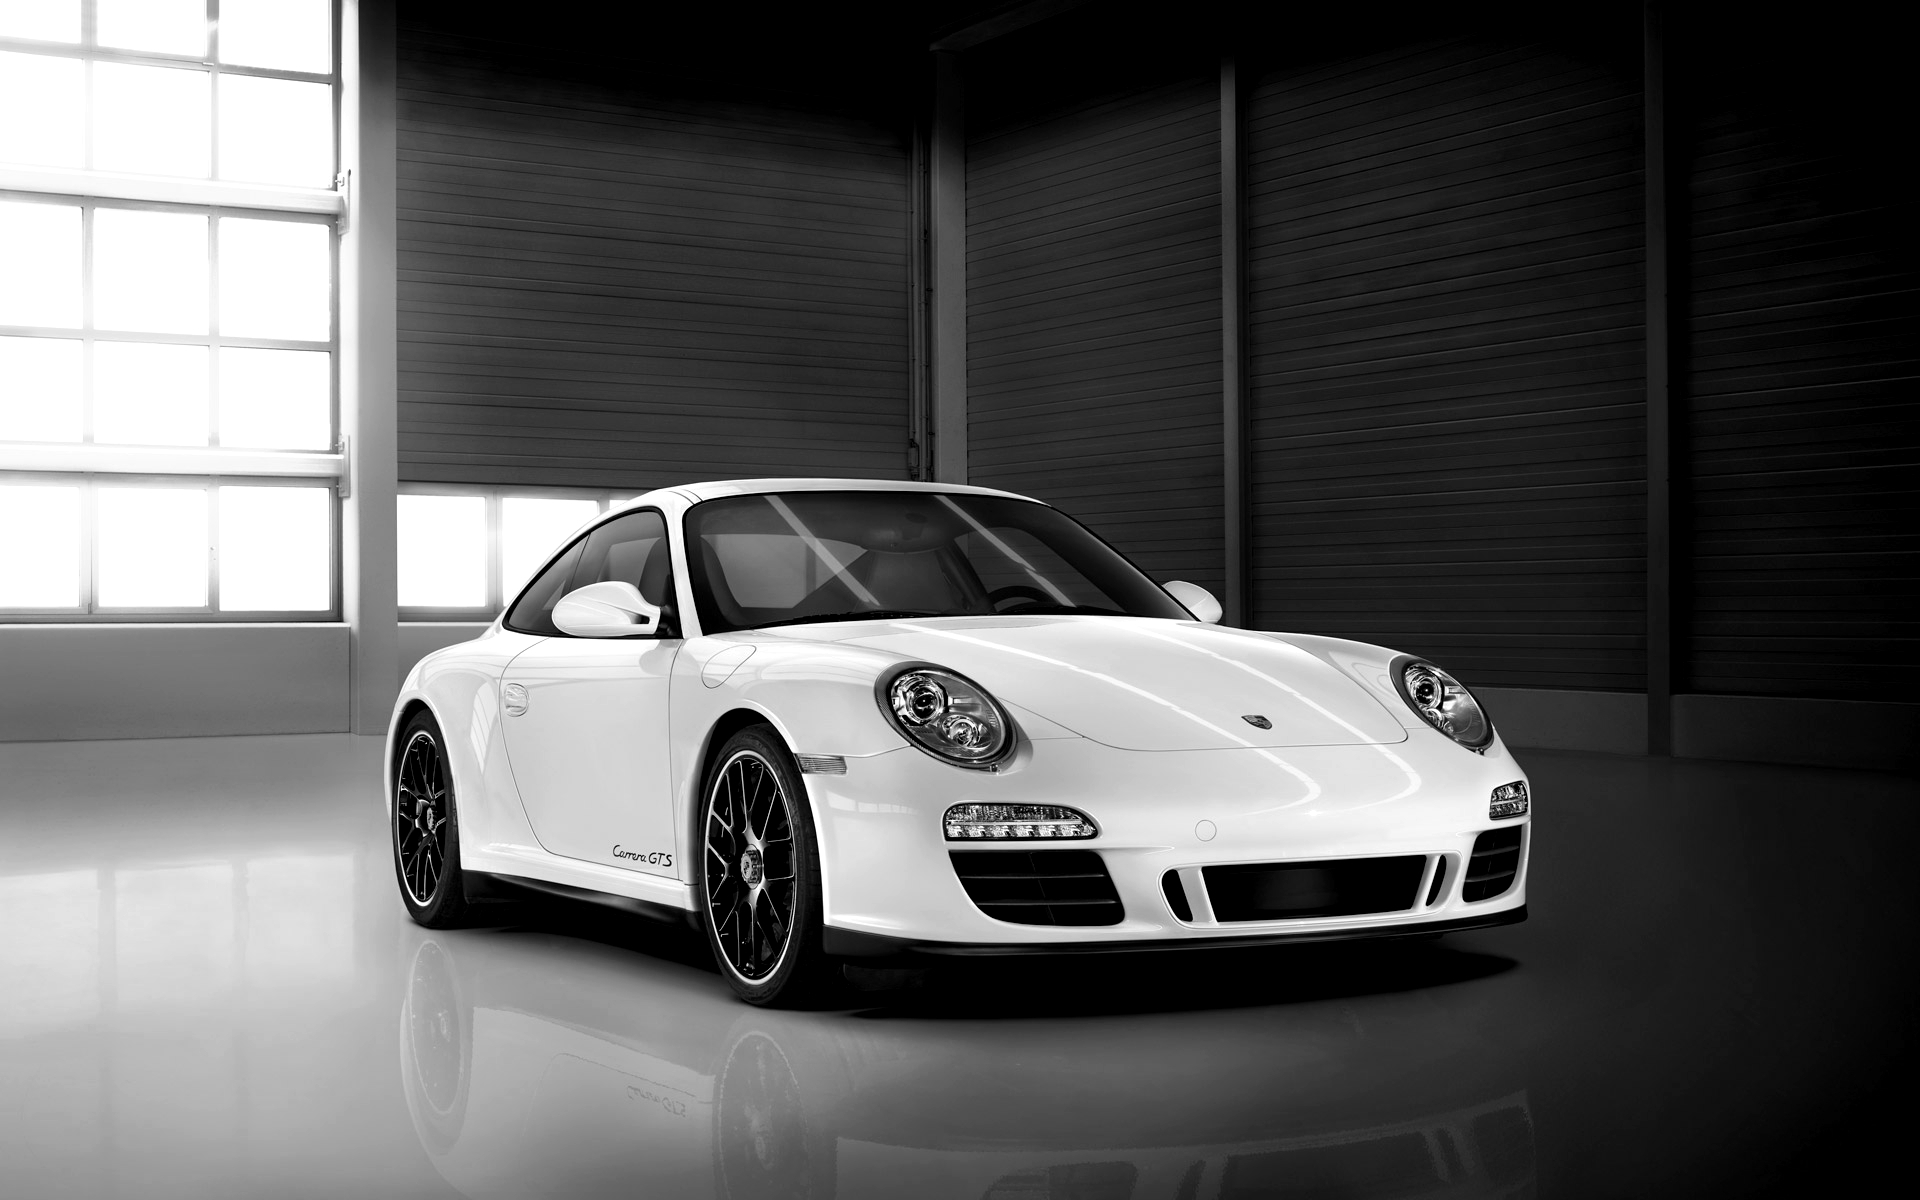 Black And White Cars 27 Hd Wallpaper - 2005 White Porsche 911 Carrera - HD Wallpaper 